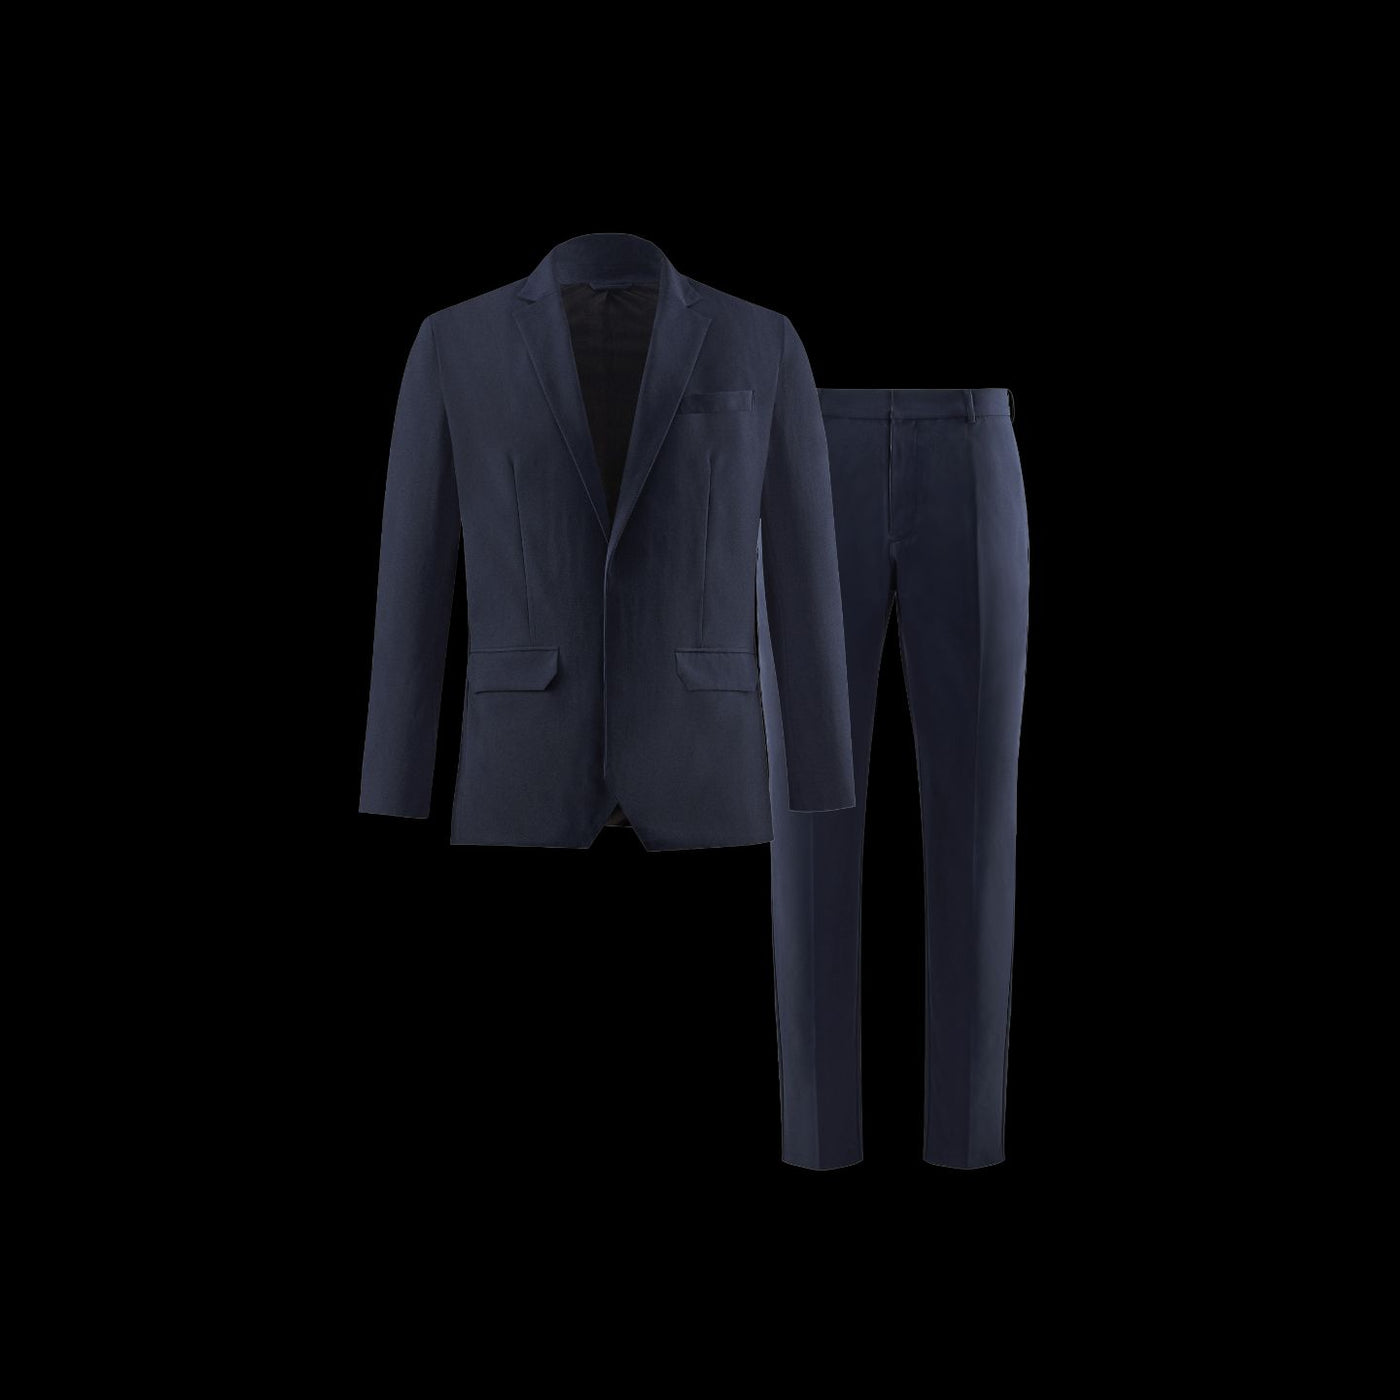 Ultra Suit 3.0 單排扣套裝組合 午夜藍